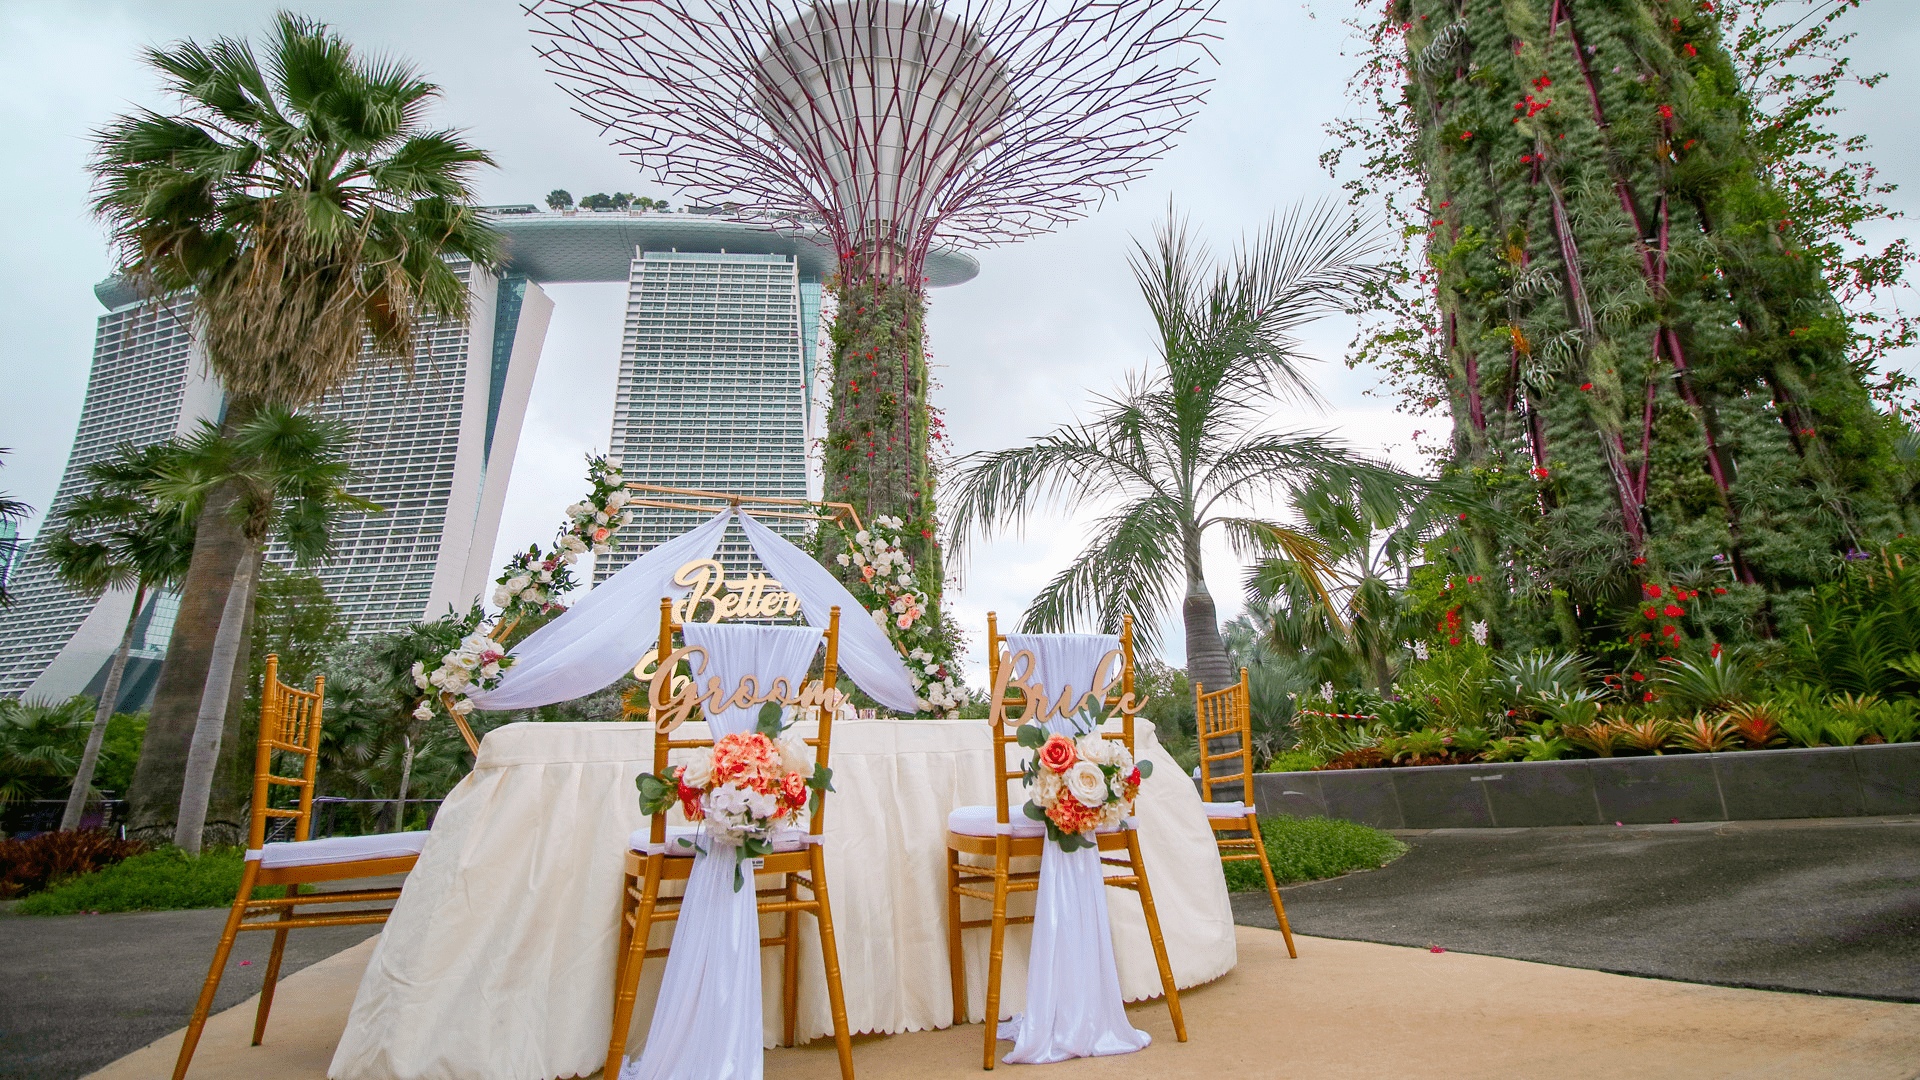 Unique Wedding Venues - Gardens by the Bay Supertree